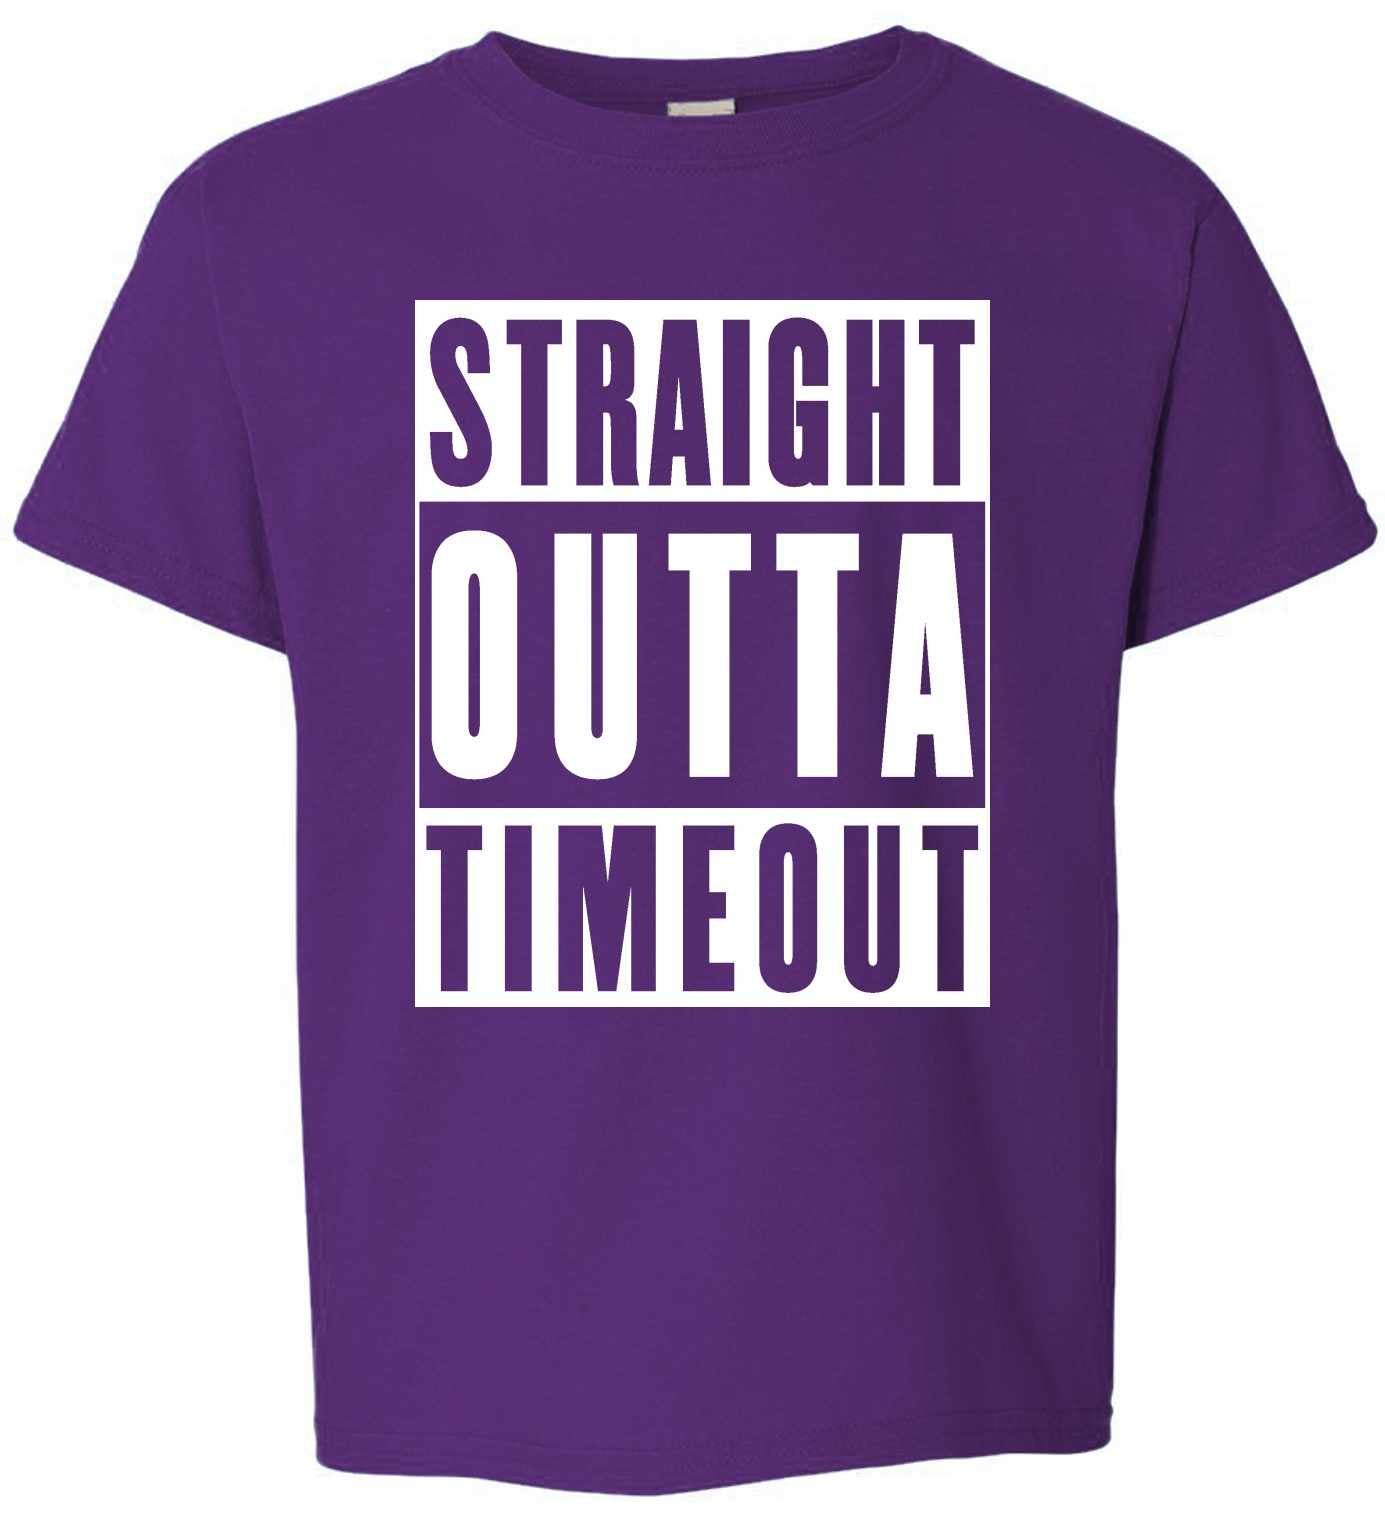 Straight Outta TimeOut on Kids T-Shirt